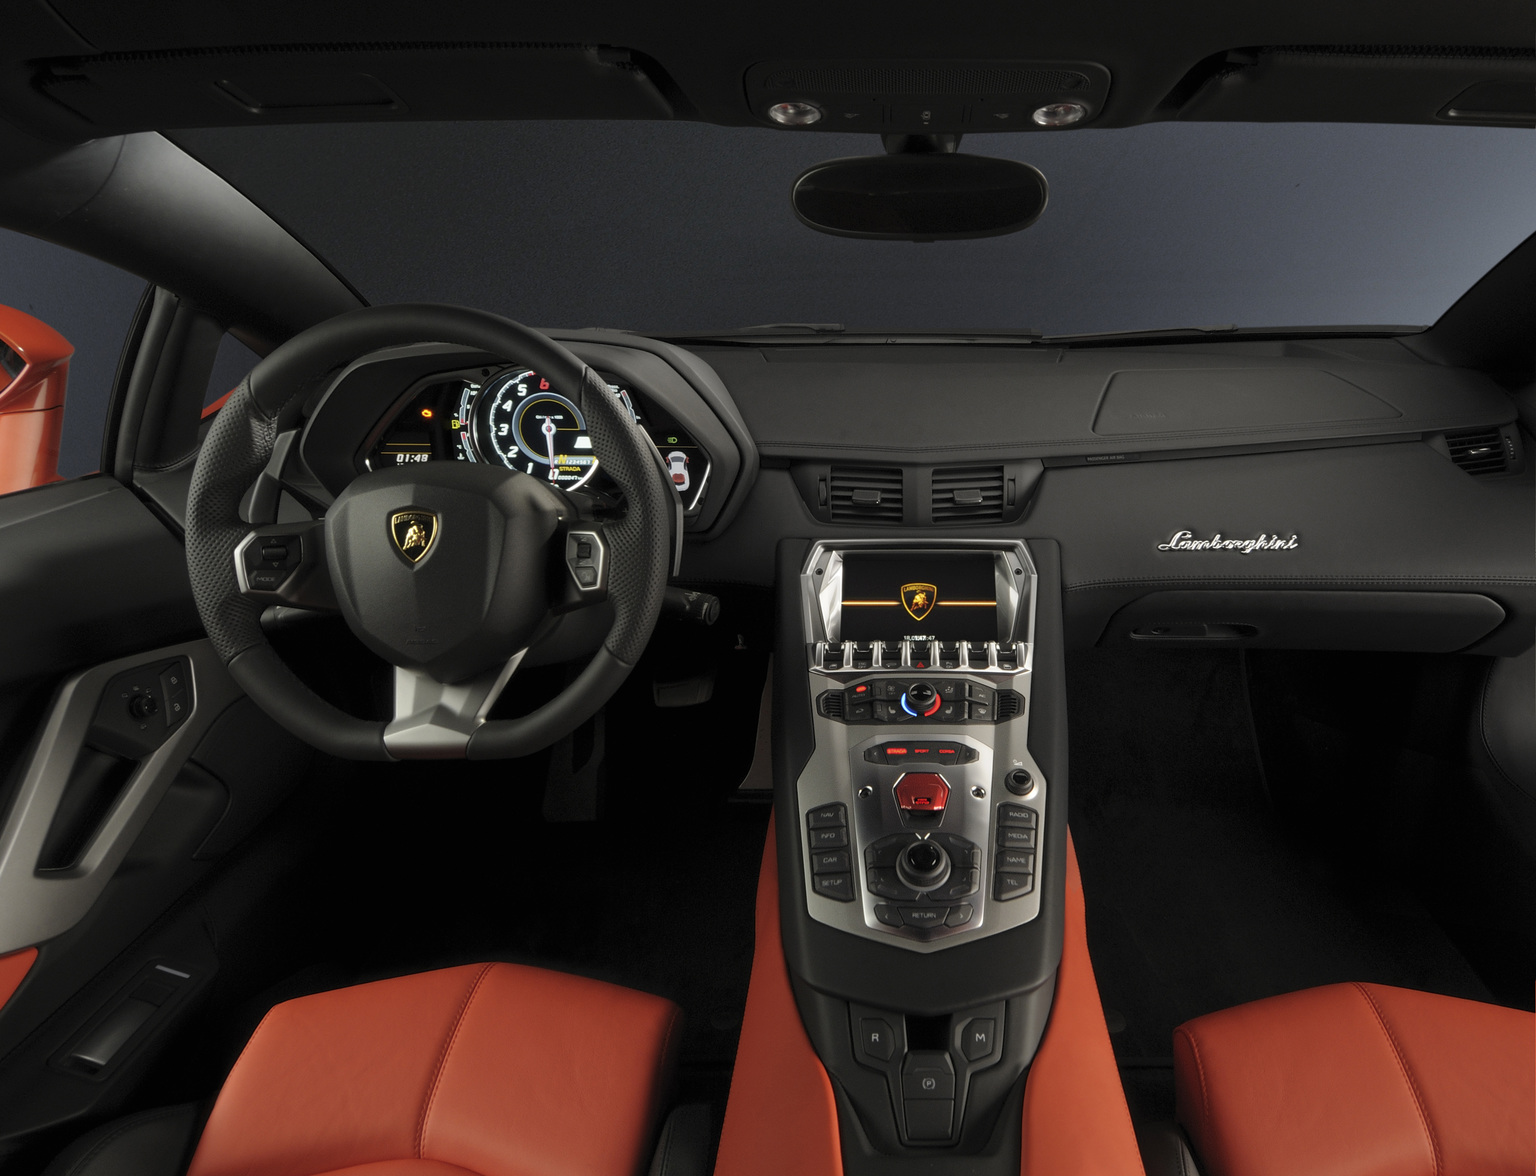 2012 Lamborghini Aventador LP 700-4